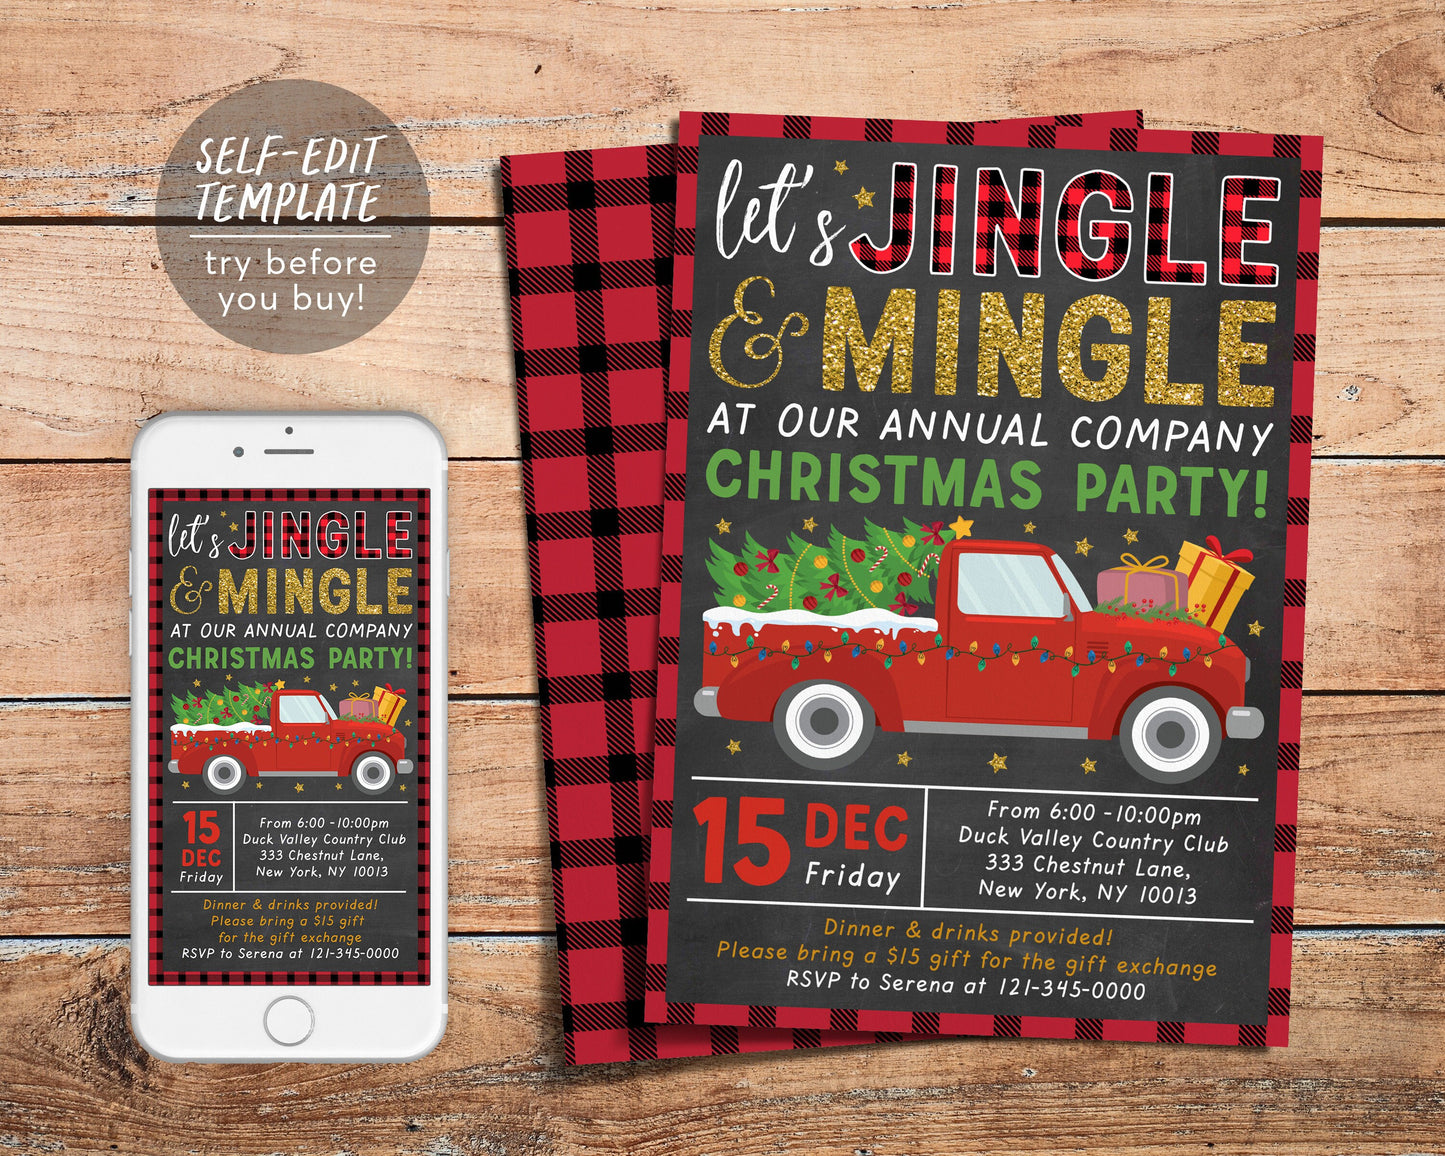 Jingle & Mingle Christmas Party Editable Template, Xmas Company Staff Holiday Party Invite, Buffalo Plaid Party, Rustic Chalkboard Evite